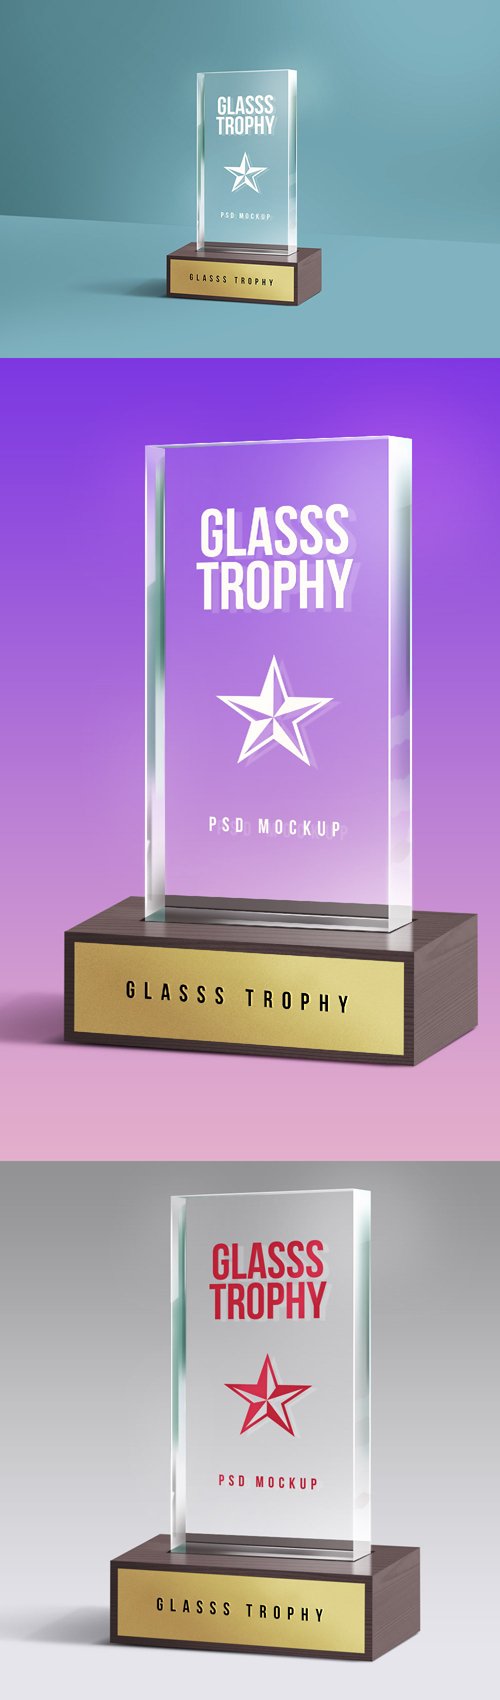 Glass Trophy PSD Mockup Template